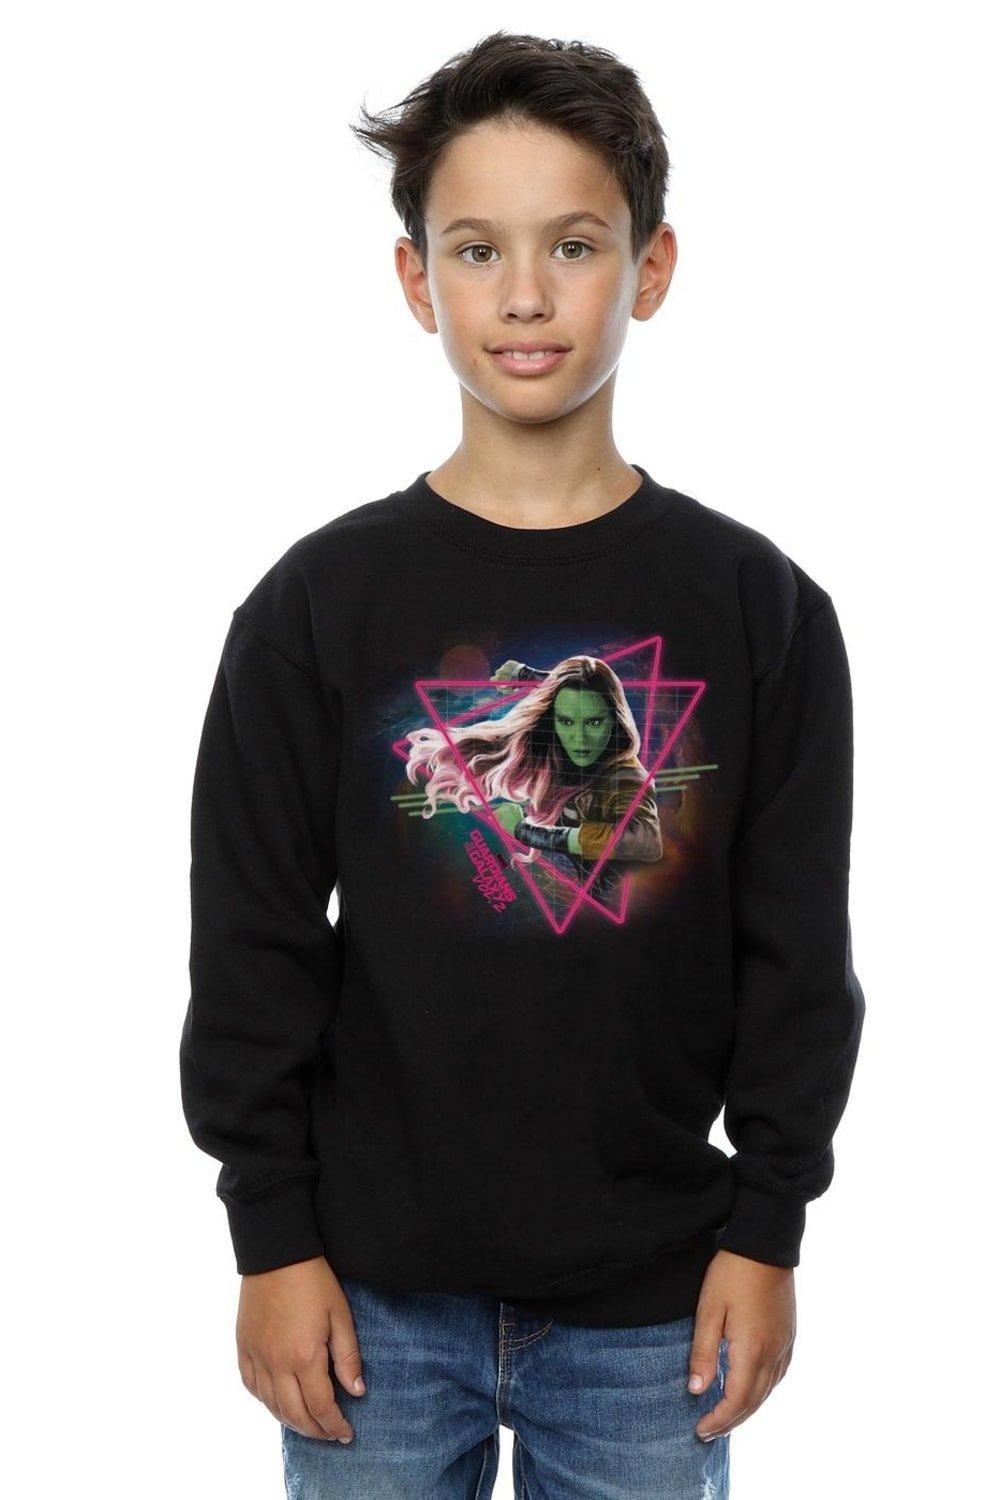 Guardians Of The Galaxy Neon Gamora Sweatshirt